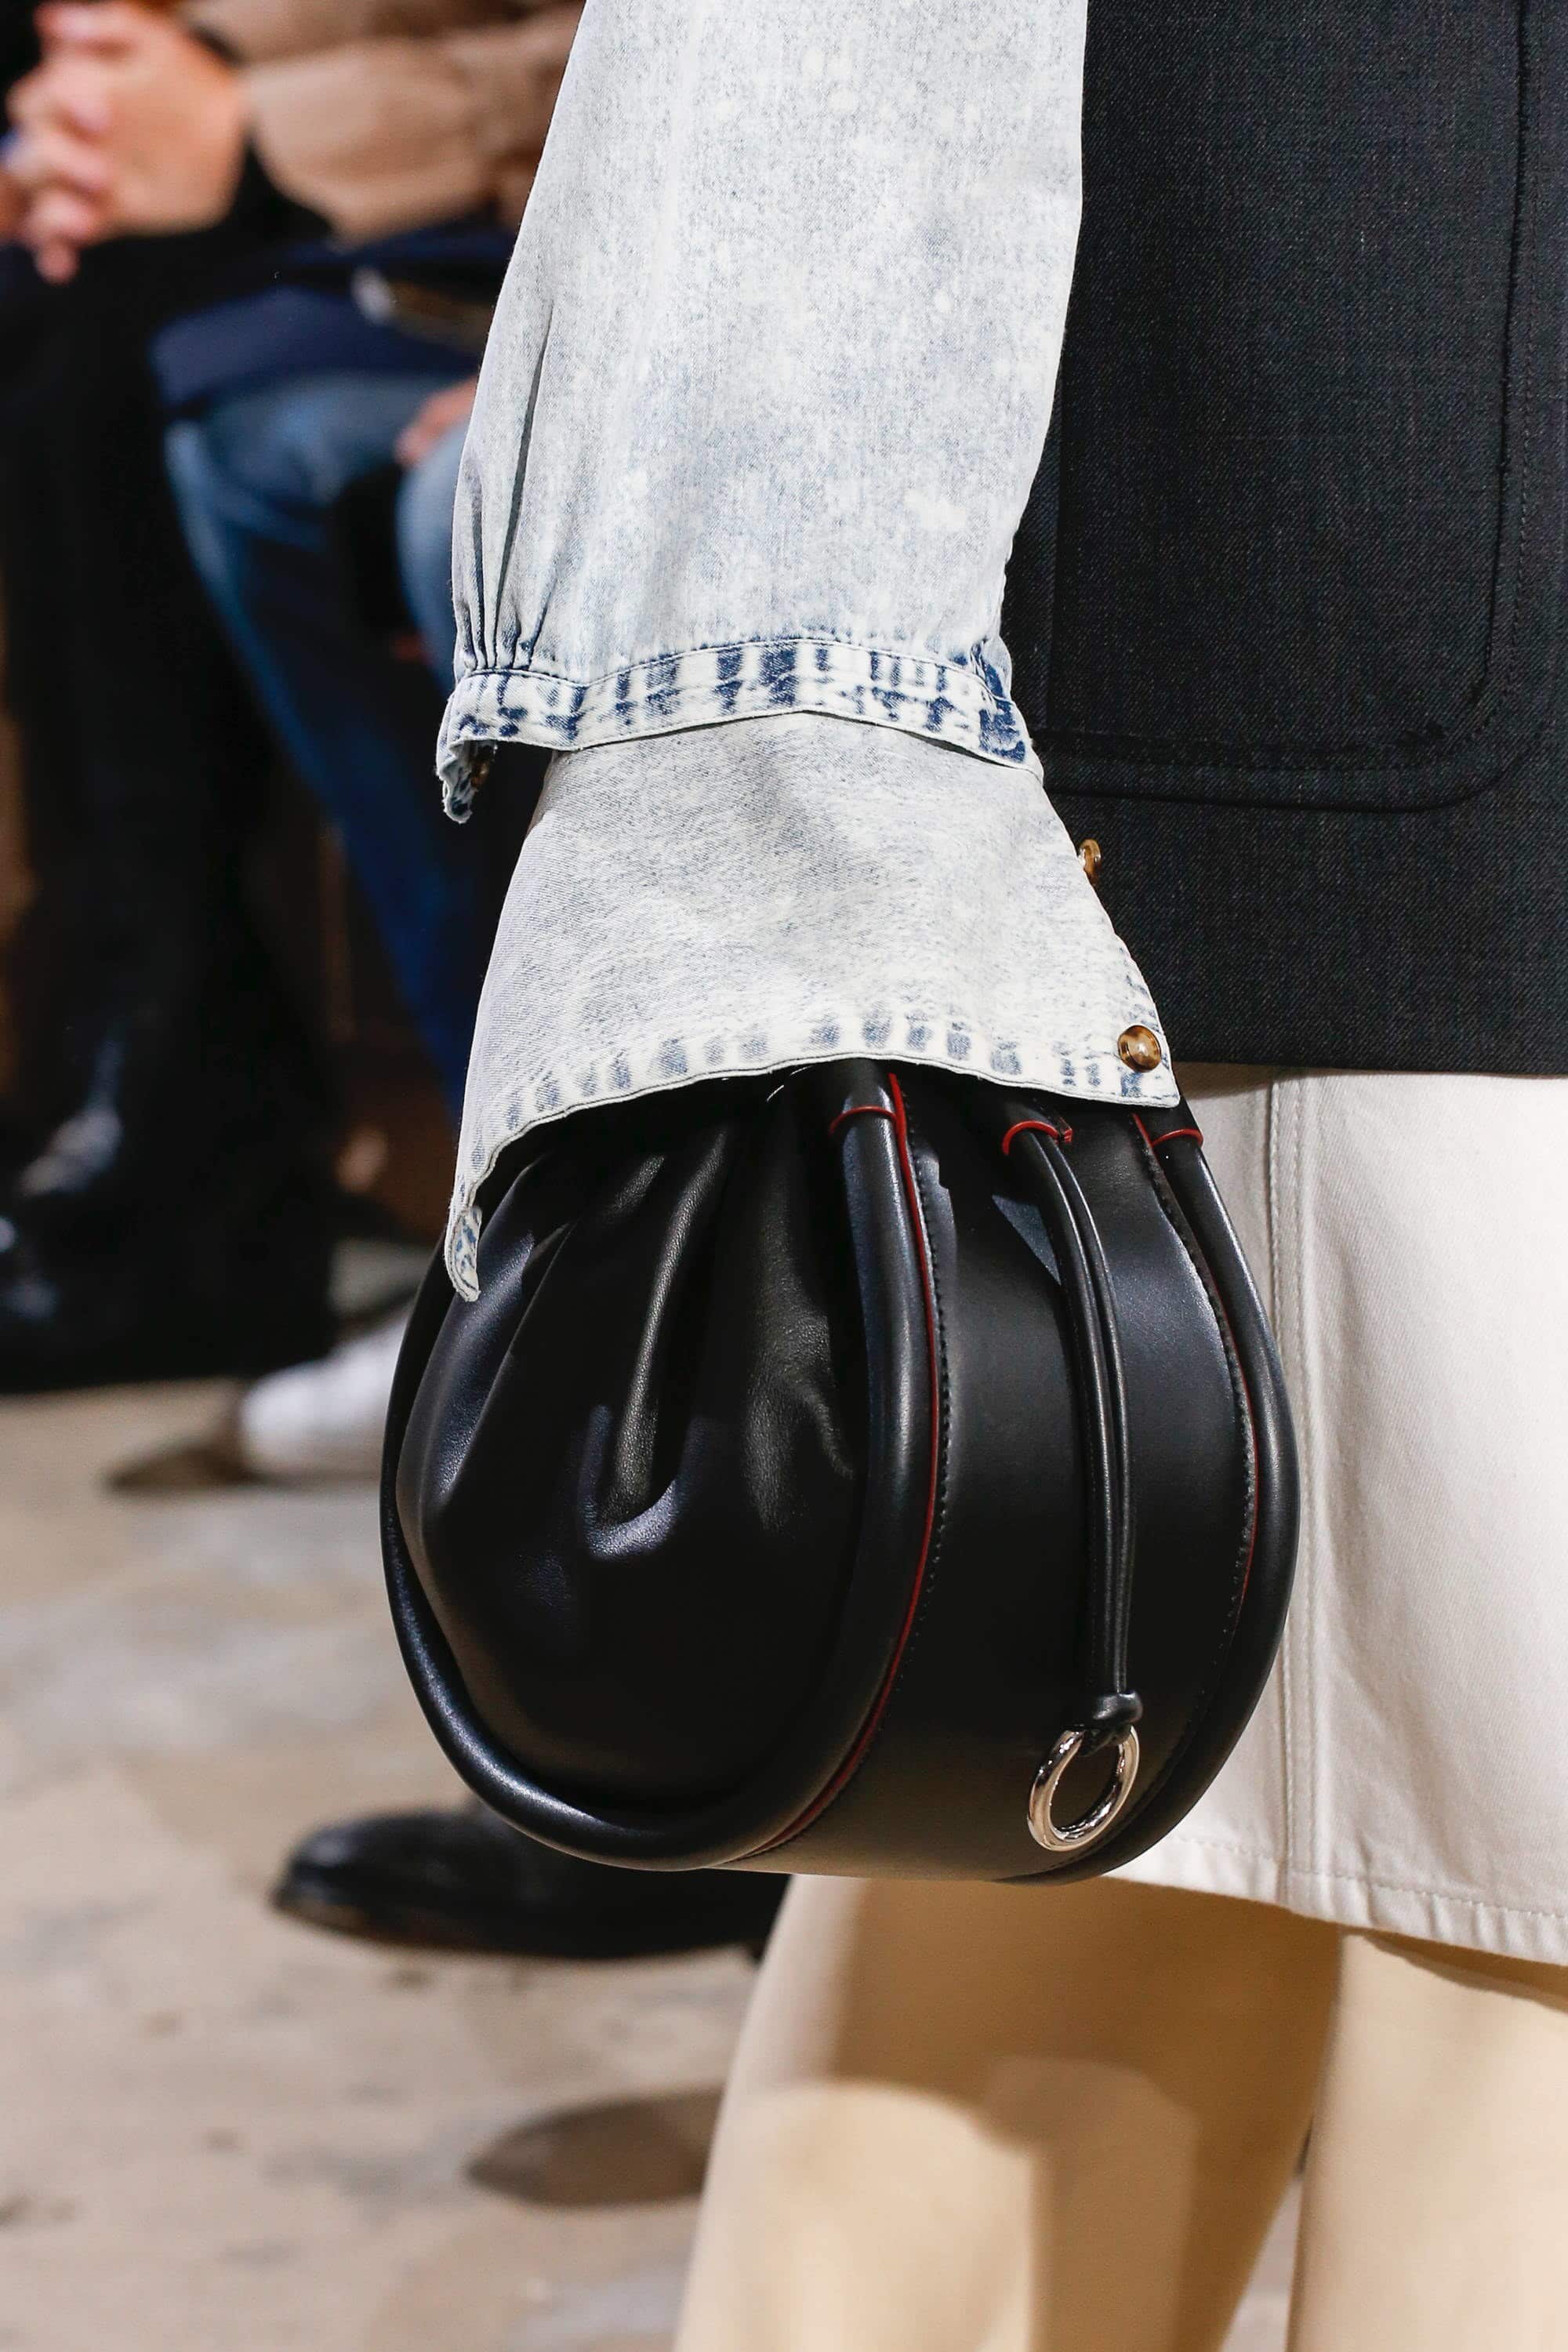 Designer Hobo Bags For Spring 2019 - Spotted Fashion